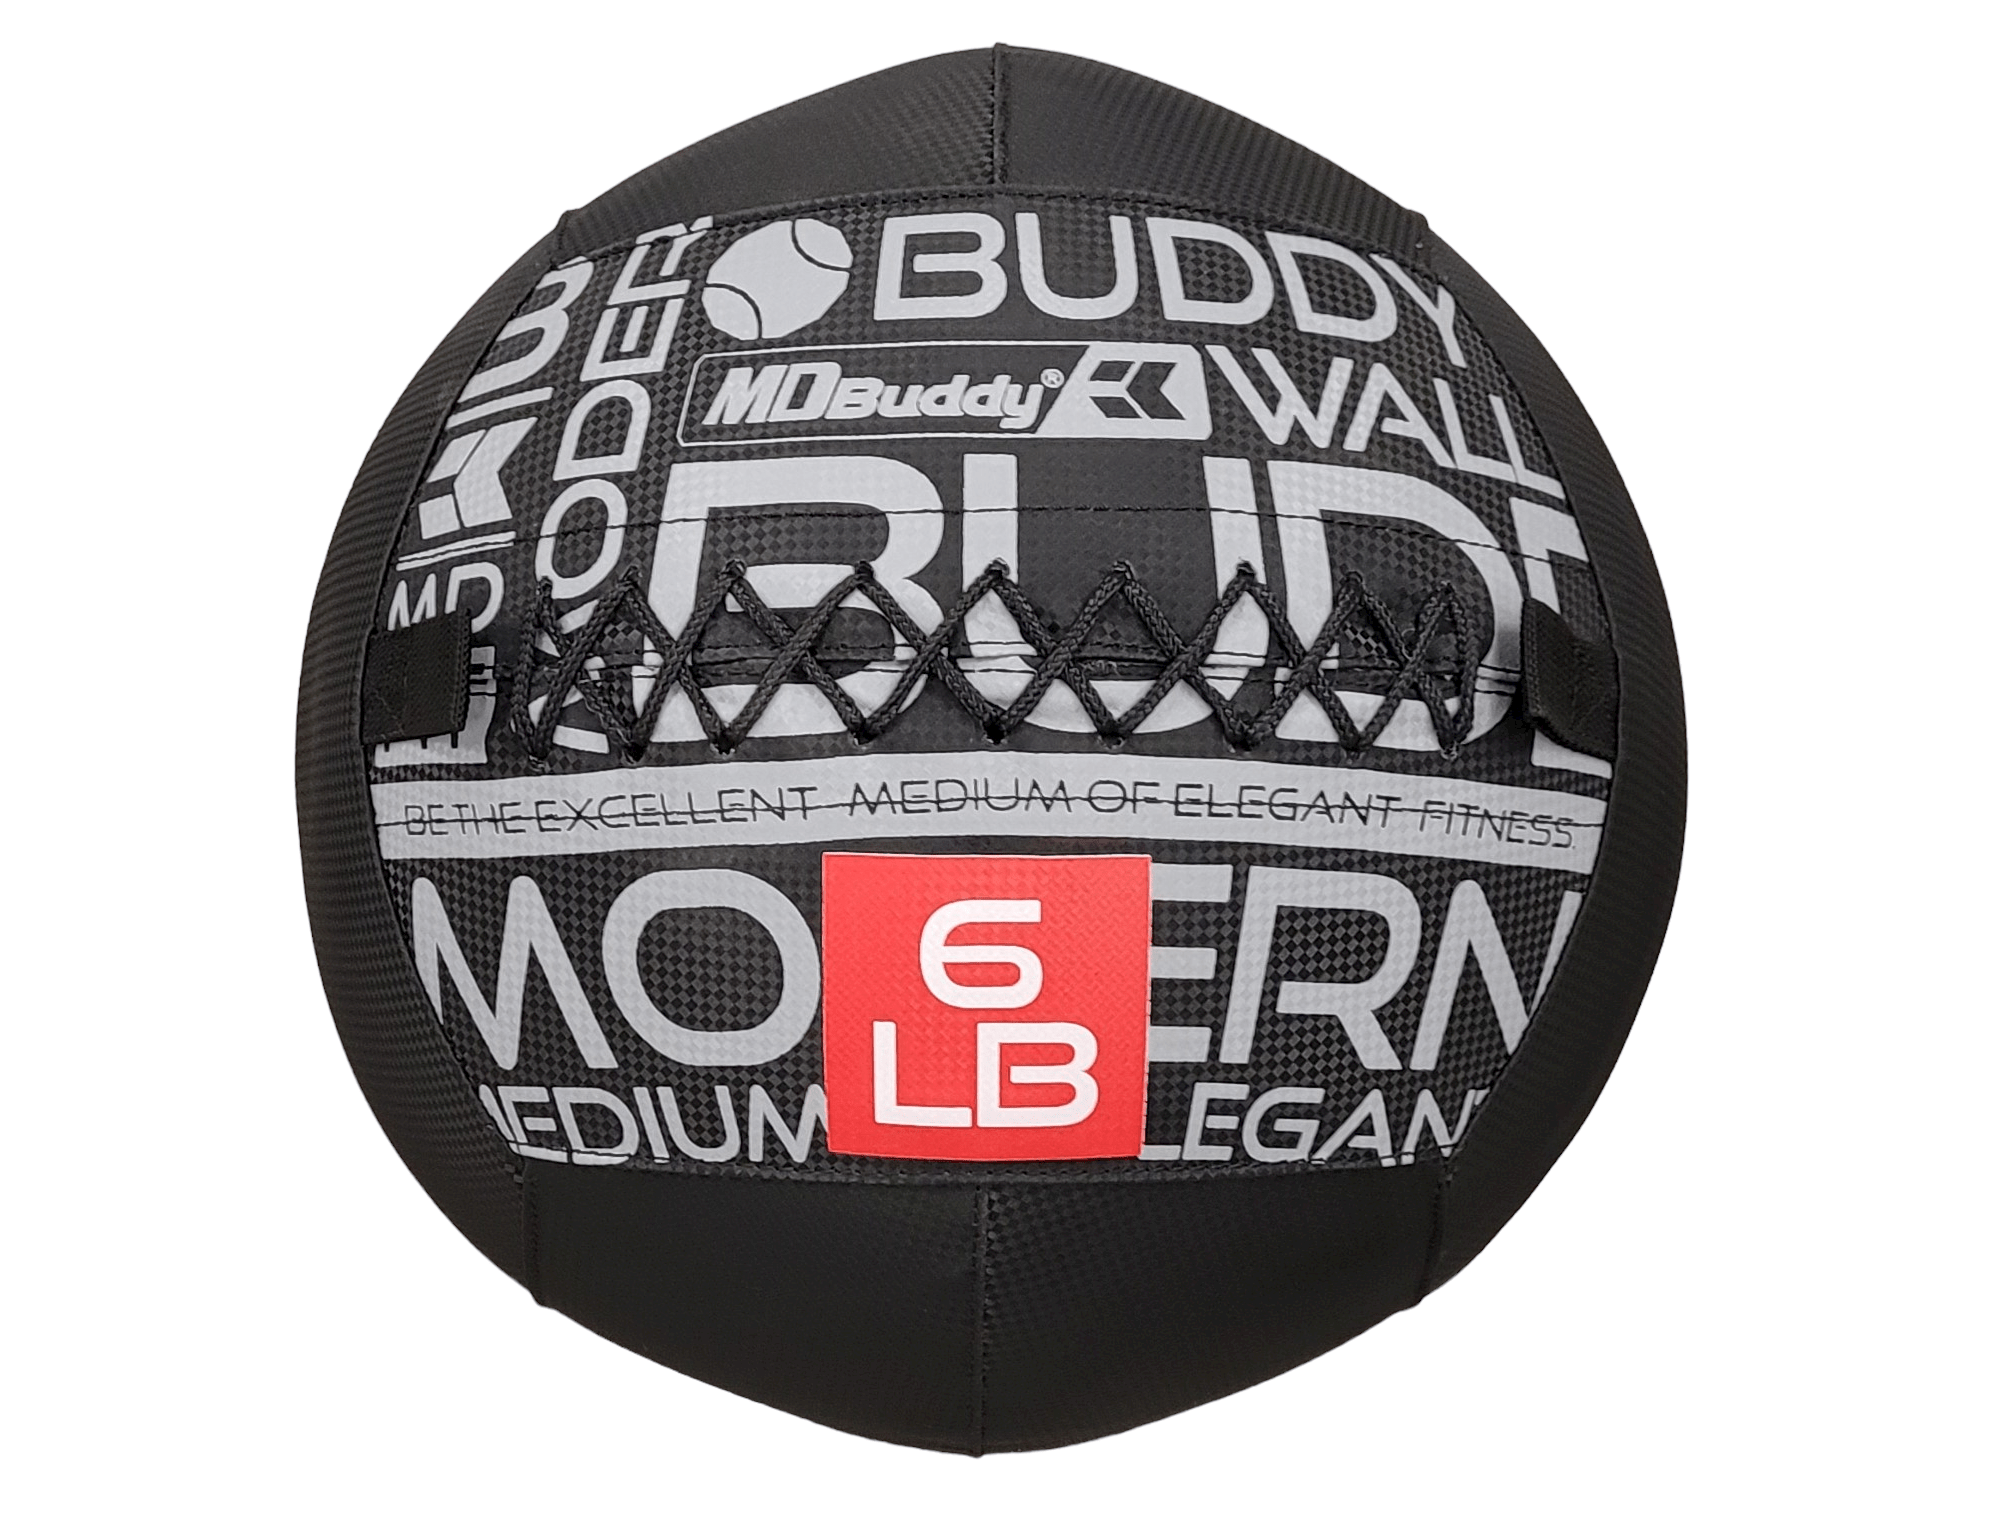 MD Buddy Wall Balls-Balls-MD Buddy-1